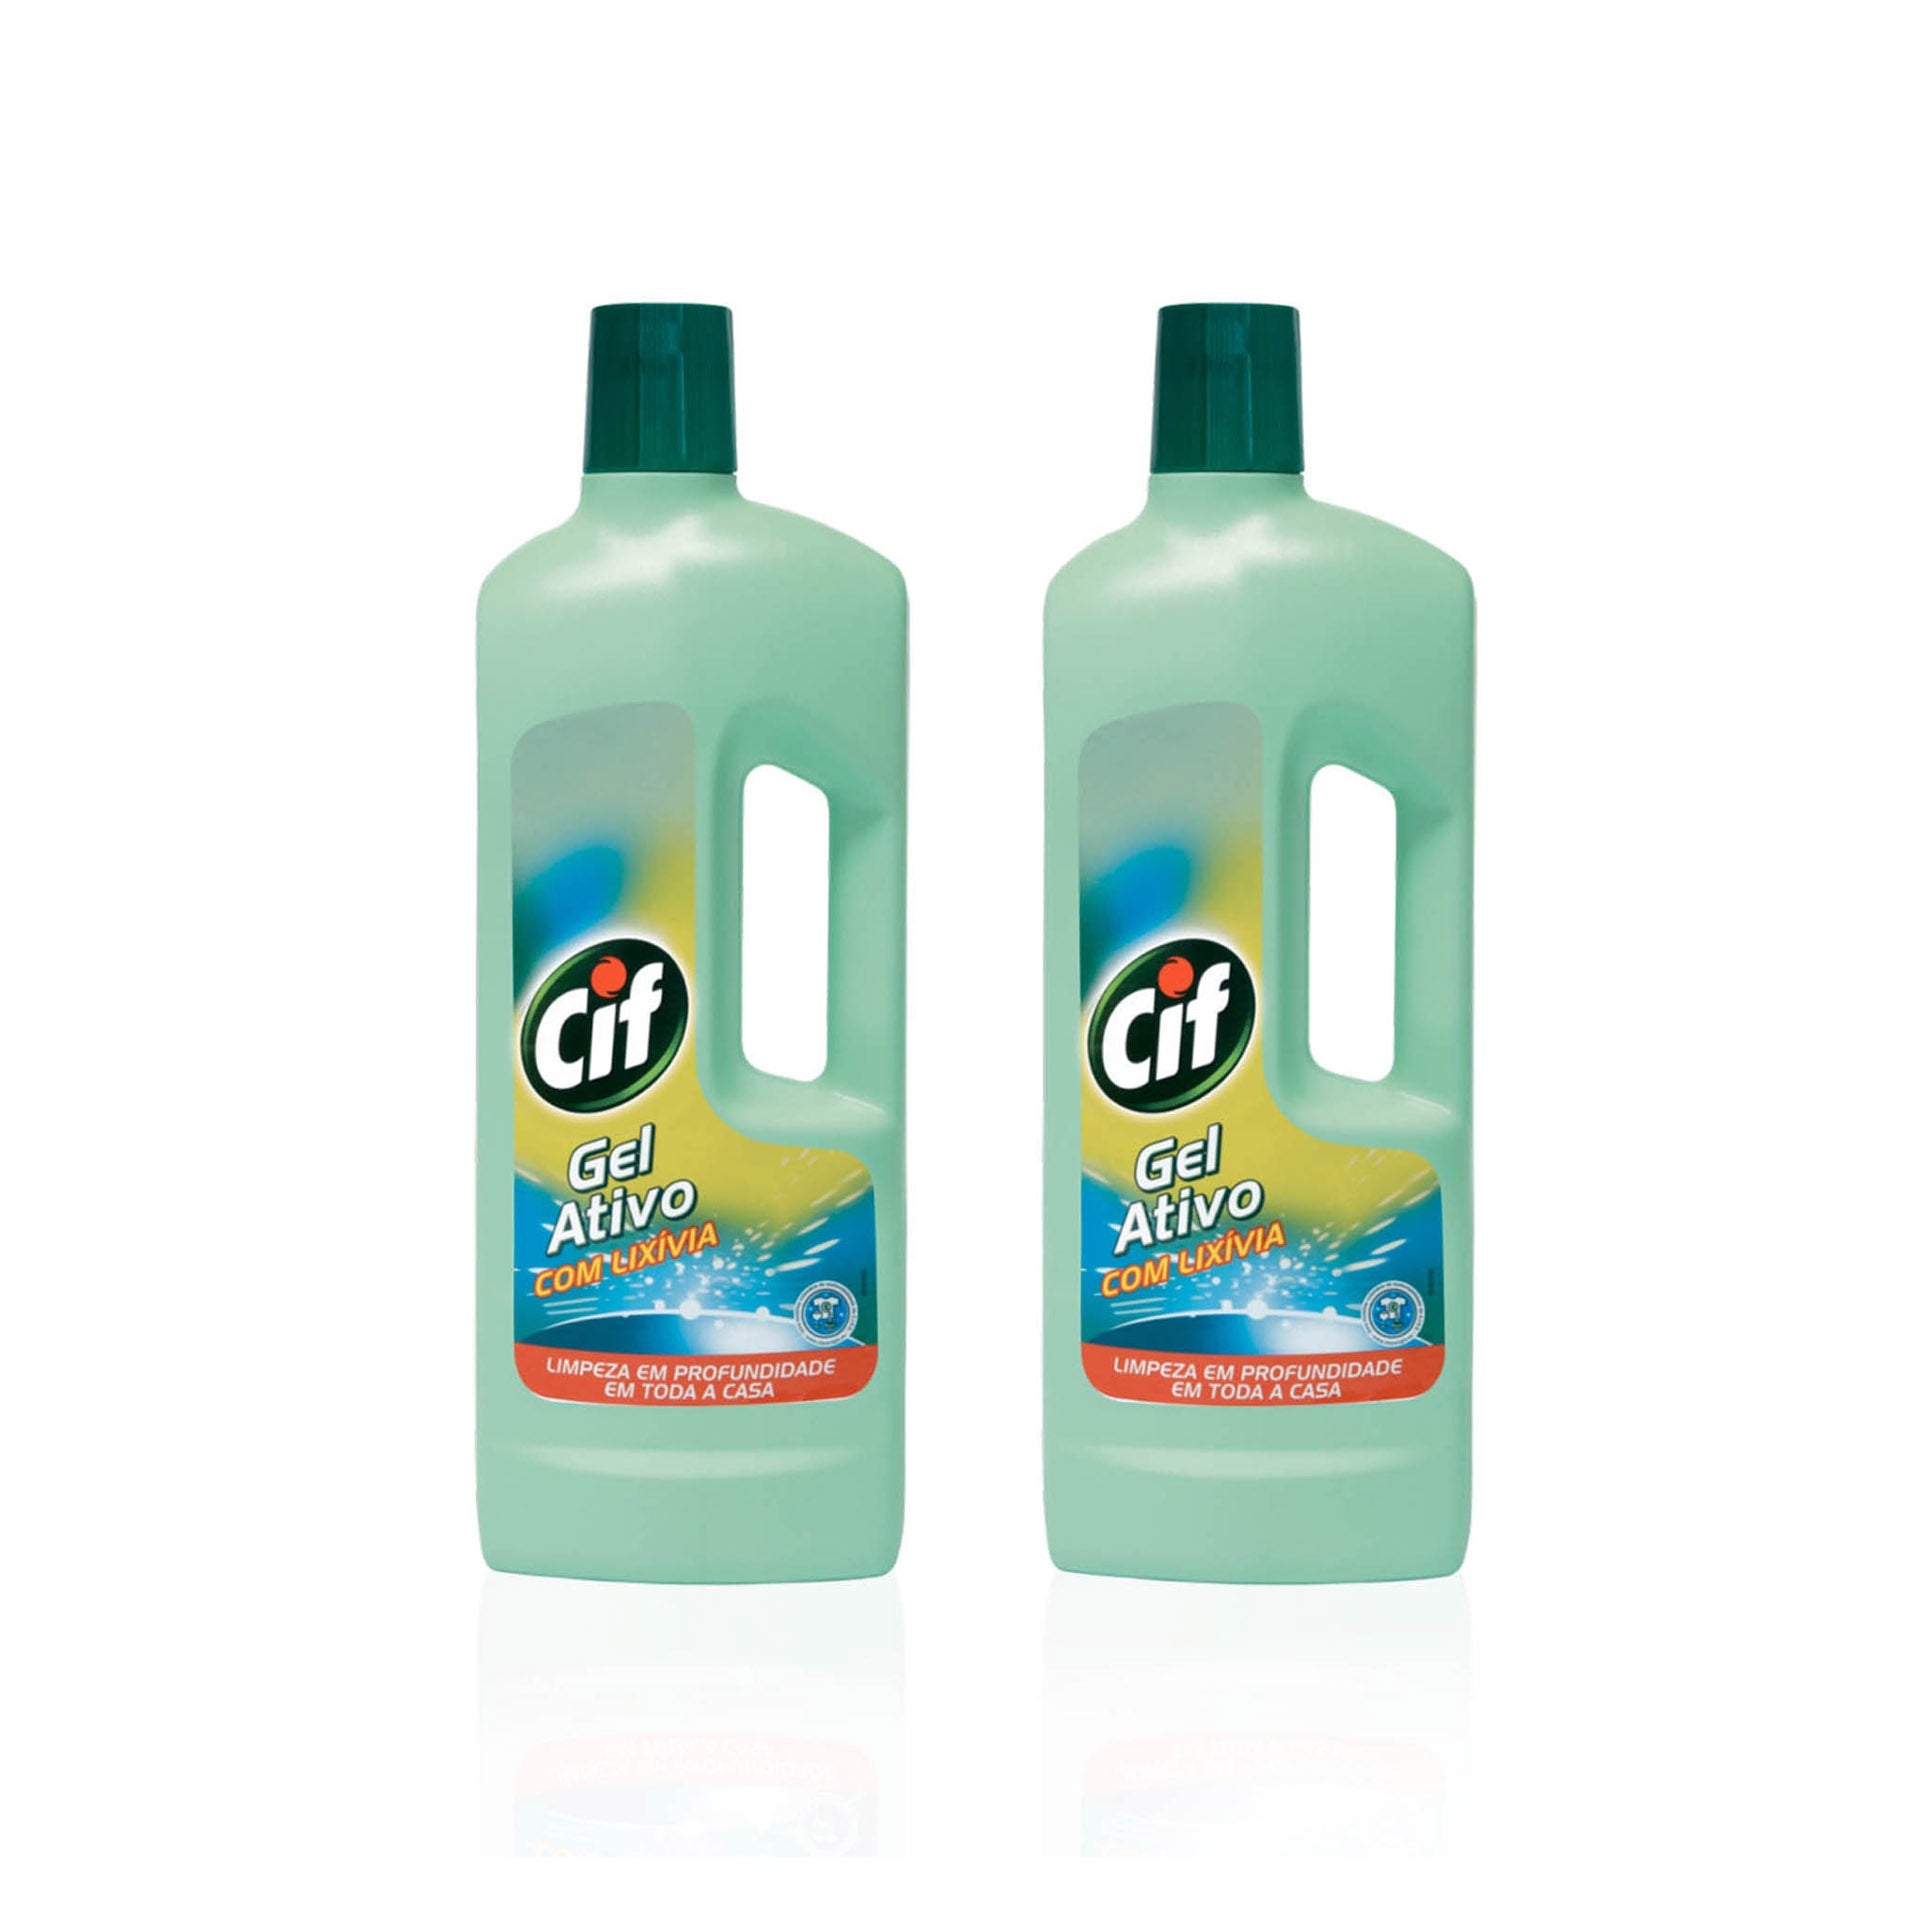 Cif Gel Ativo com Lixívia 750 ml - Pack 2 x 750 ml